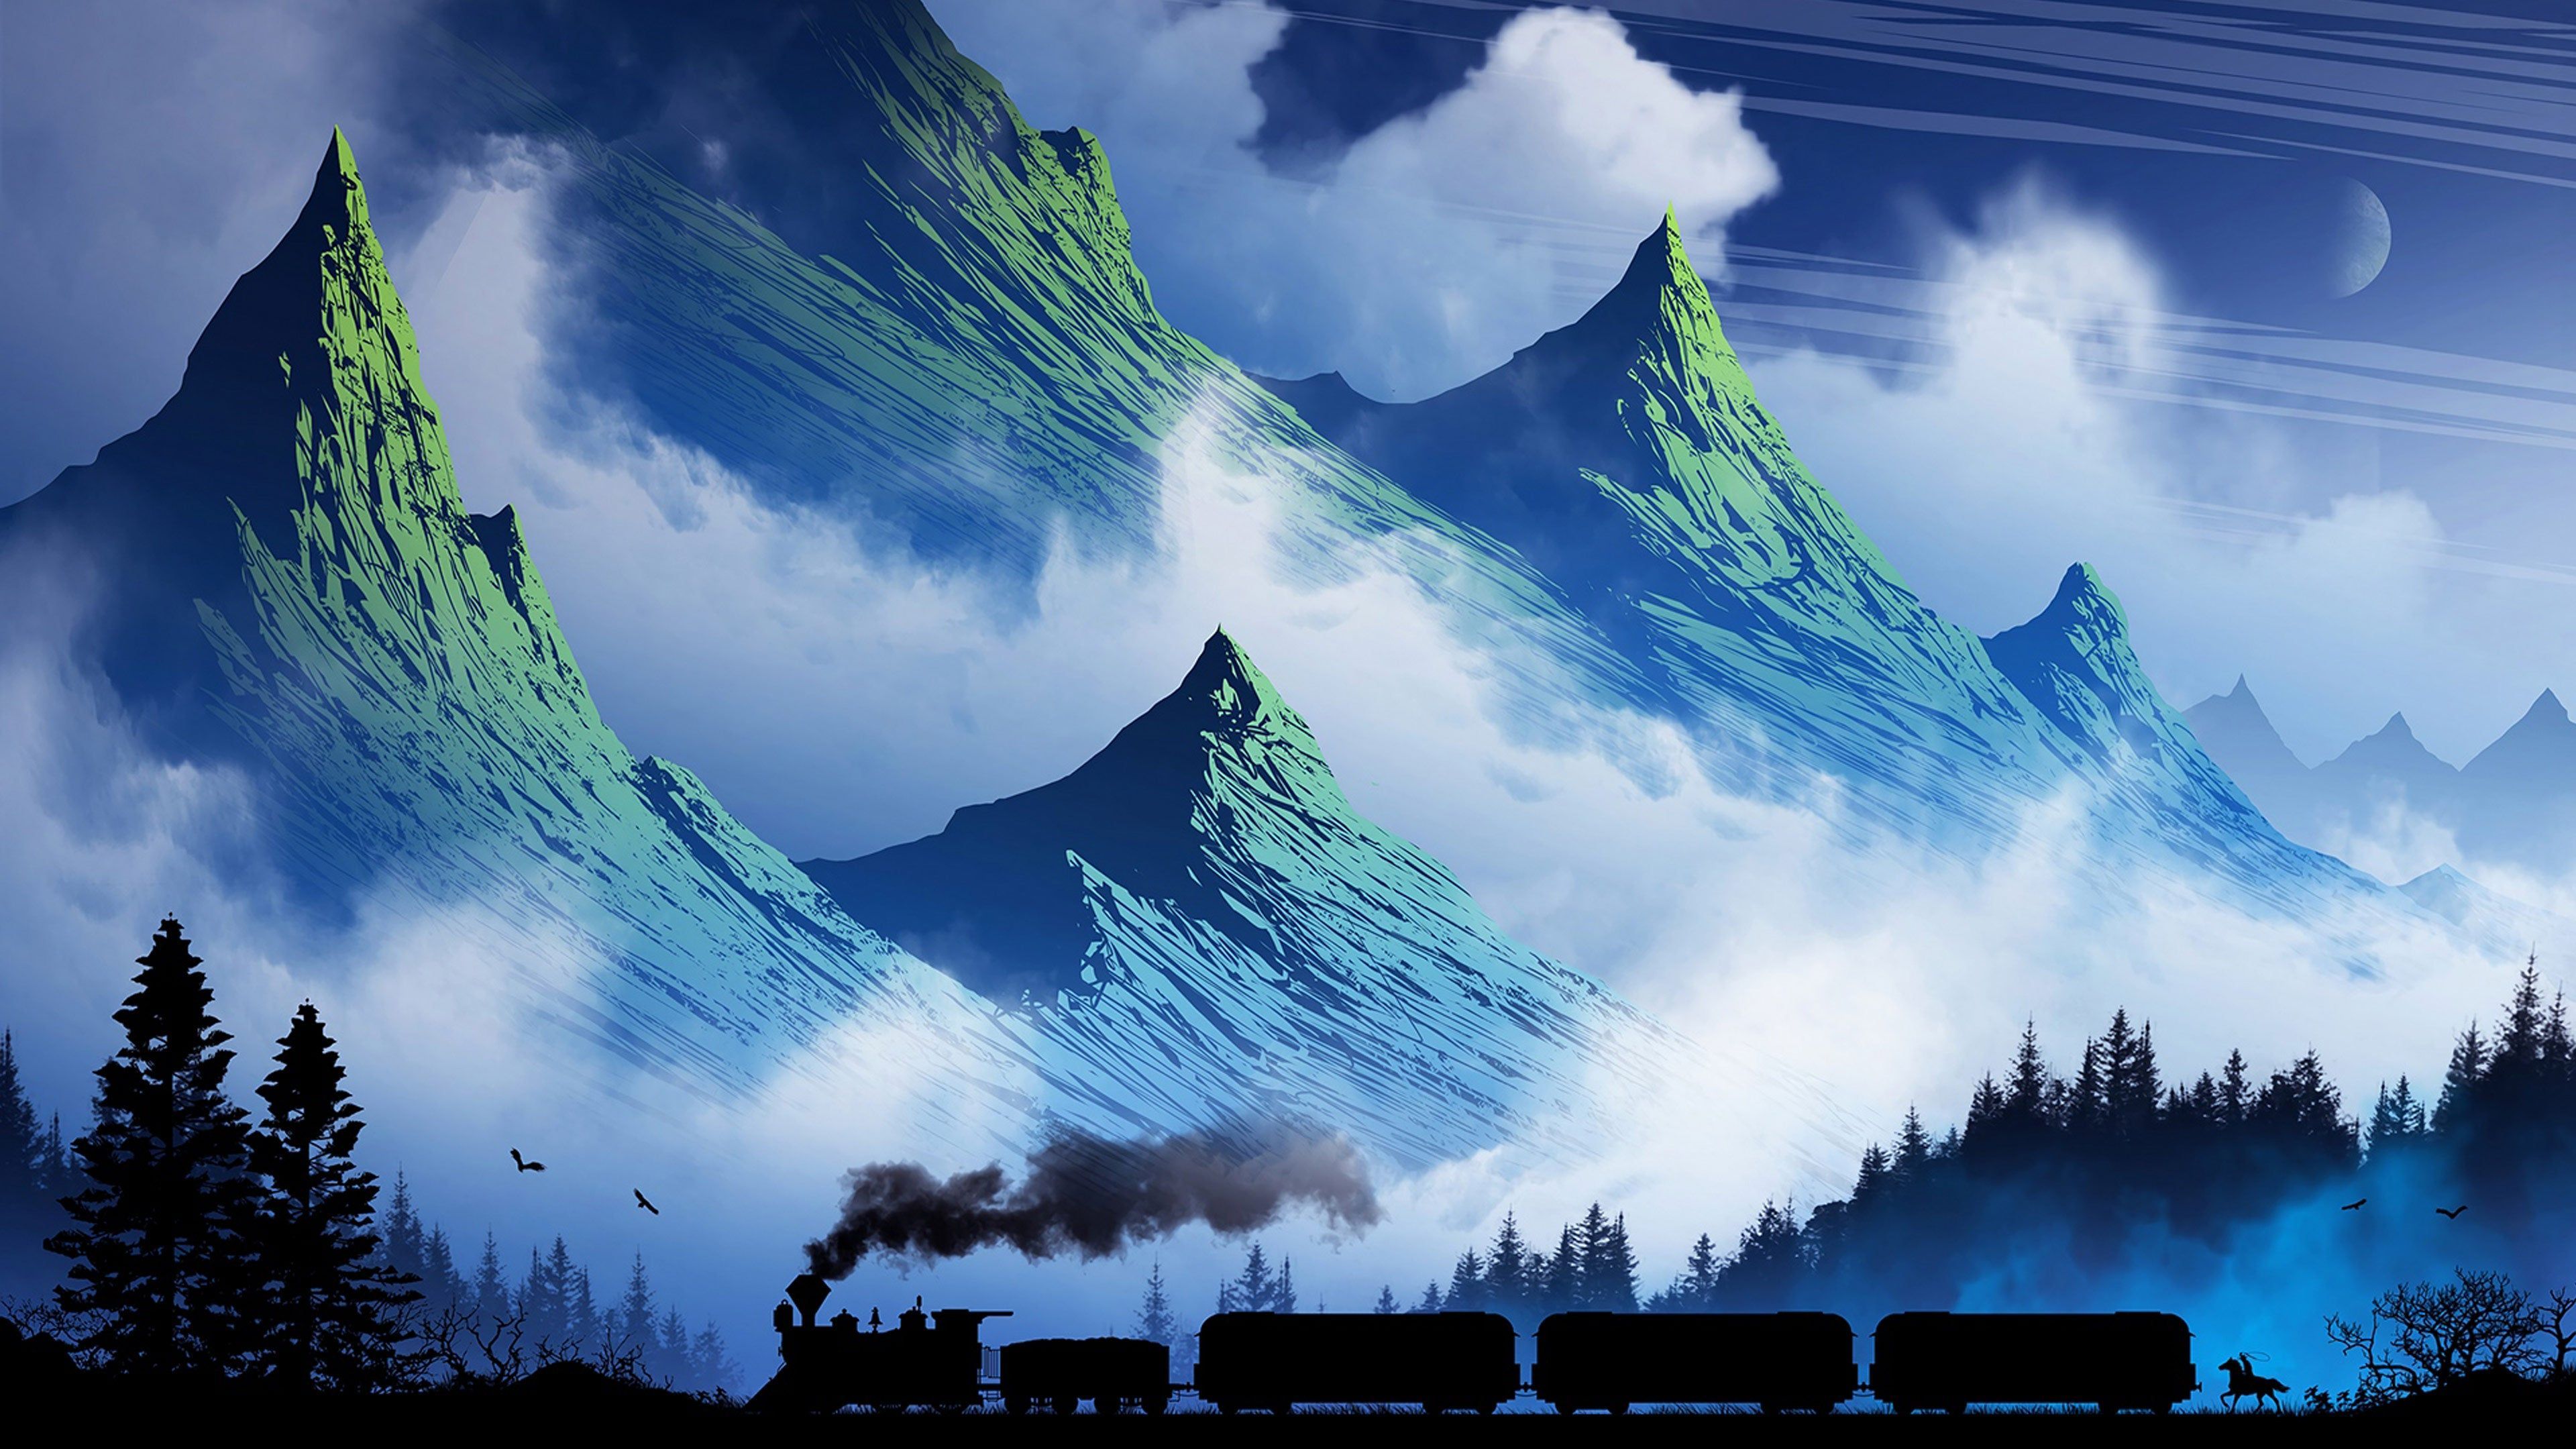 Mountain and Train Art 4K wallpaper. Cool background, Mountain art, Art wallpaper